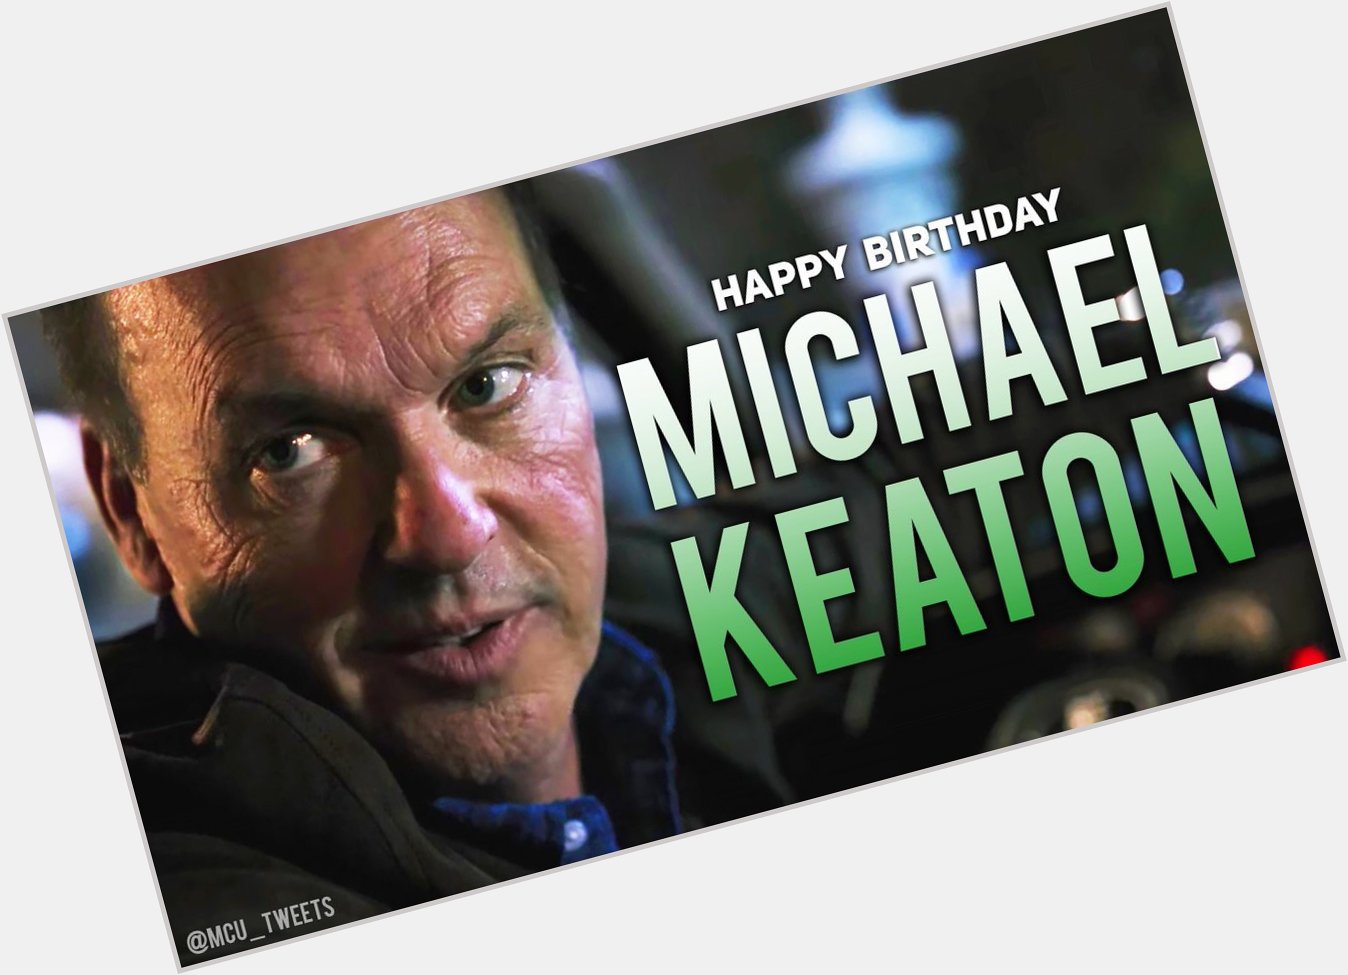 Happy birthday Michael Keaton best mcu villain in awhile. 